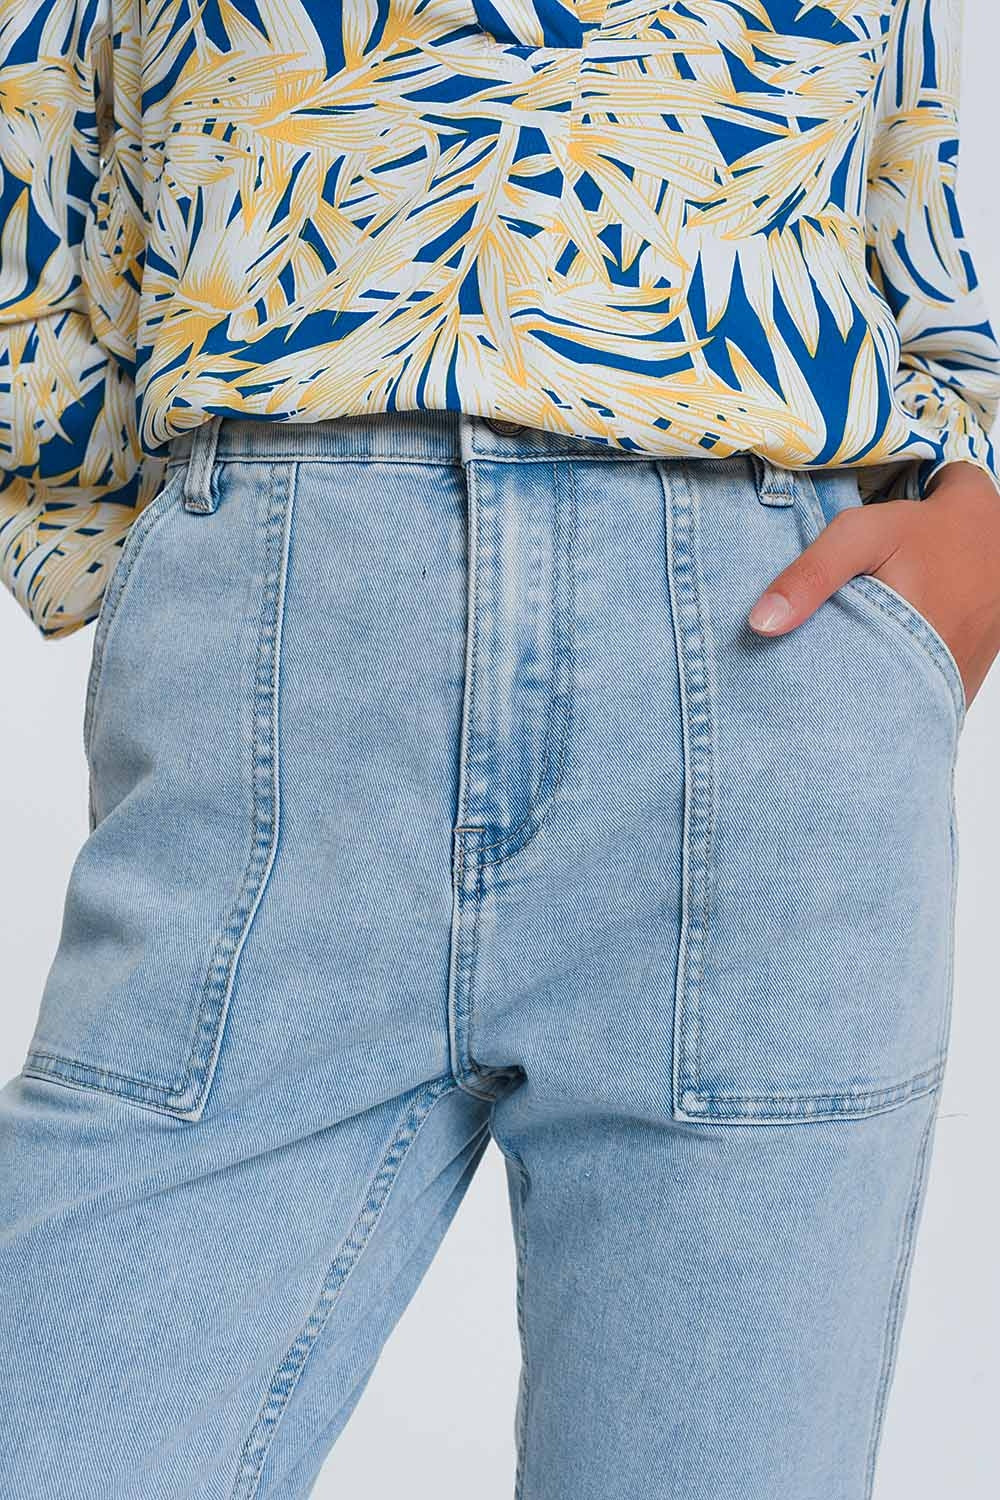 Pocket detail jeans in light denimJeans